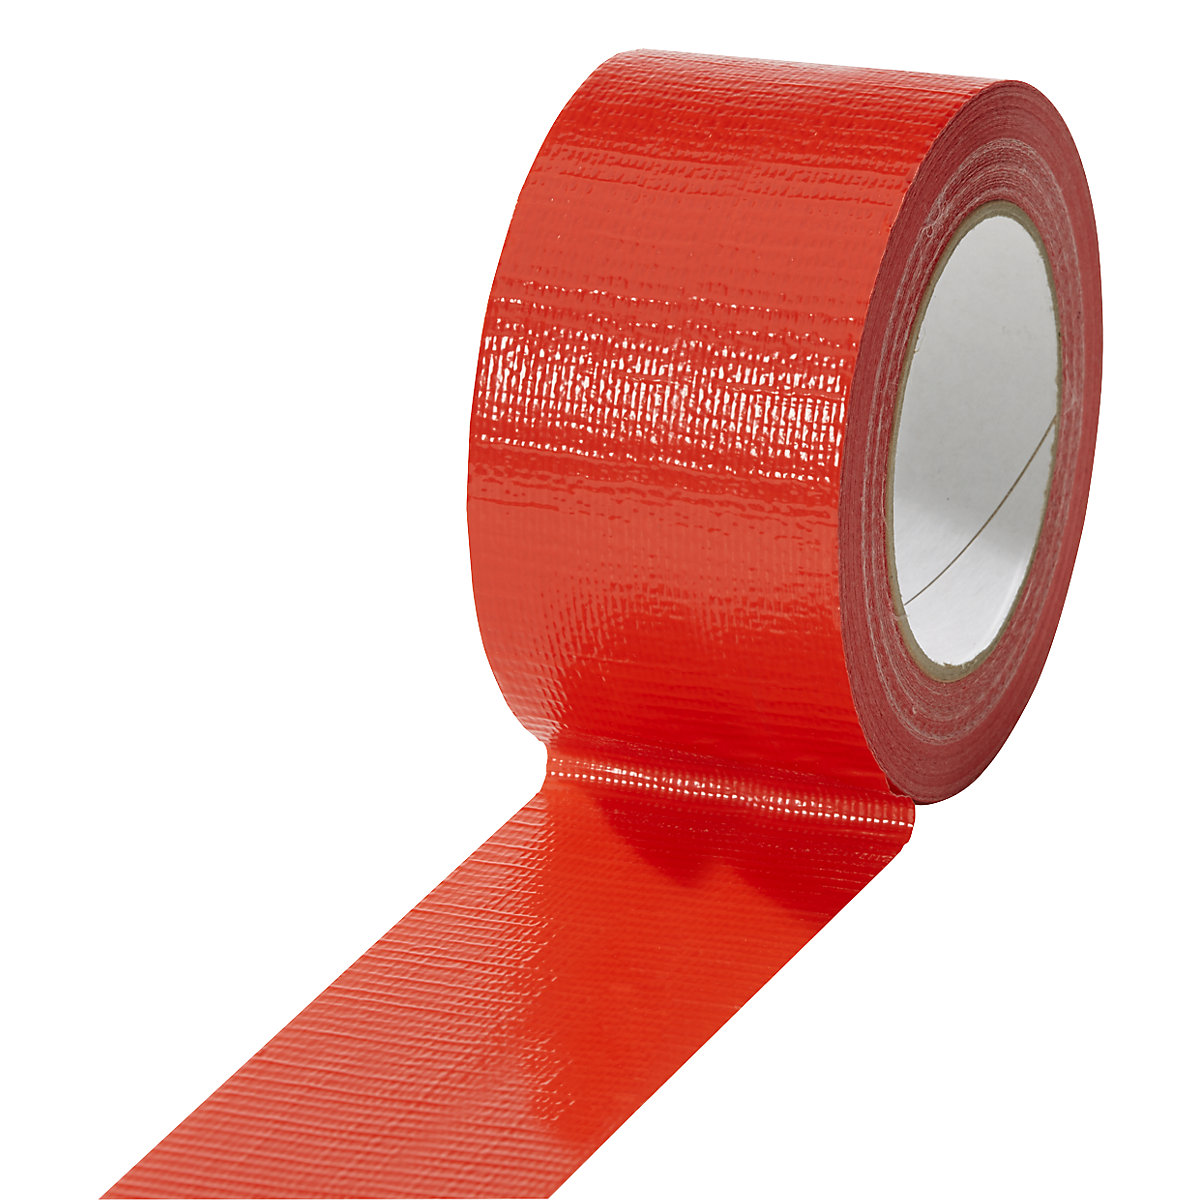 Tkaninová páska, v různých barvách, bal.j. 18 rolí, červená, šířka pásky 50 mm-18